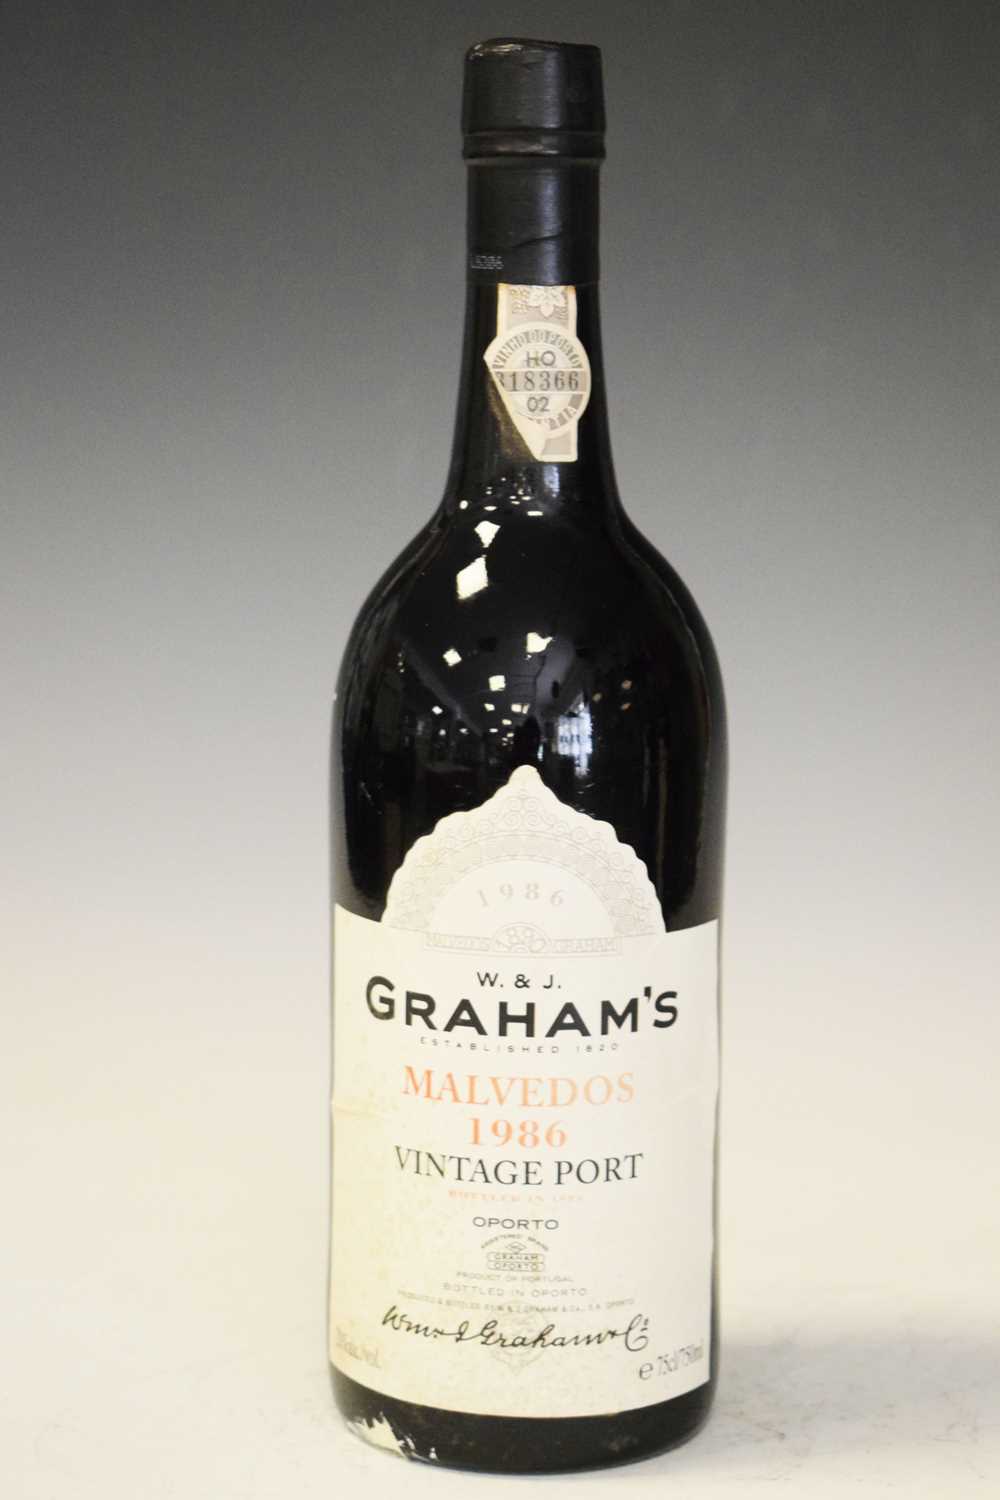 Graham's Malvedos vintage port, 1986, one bottle